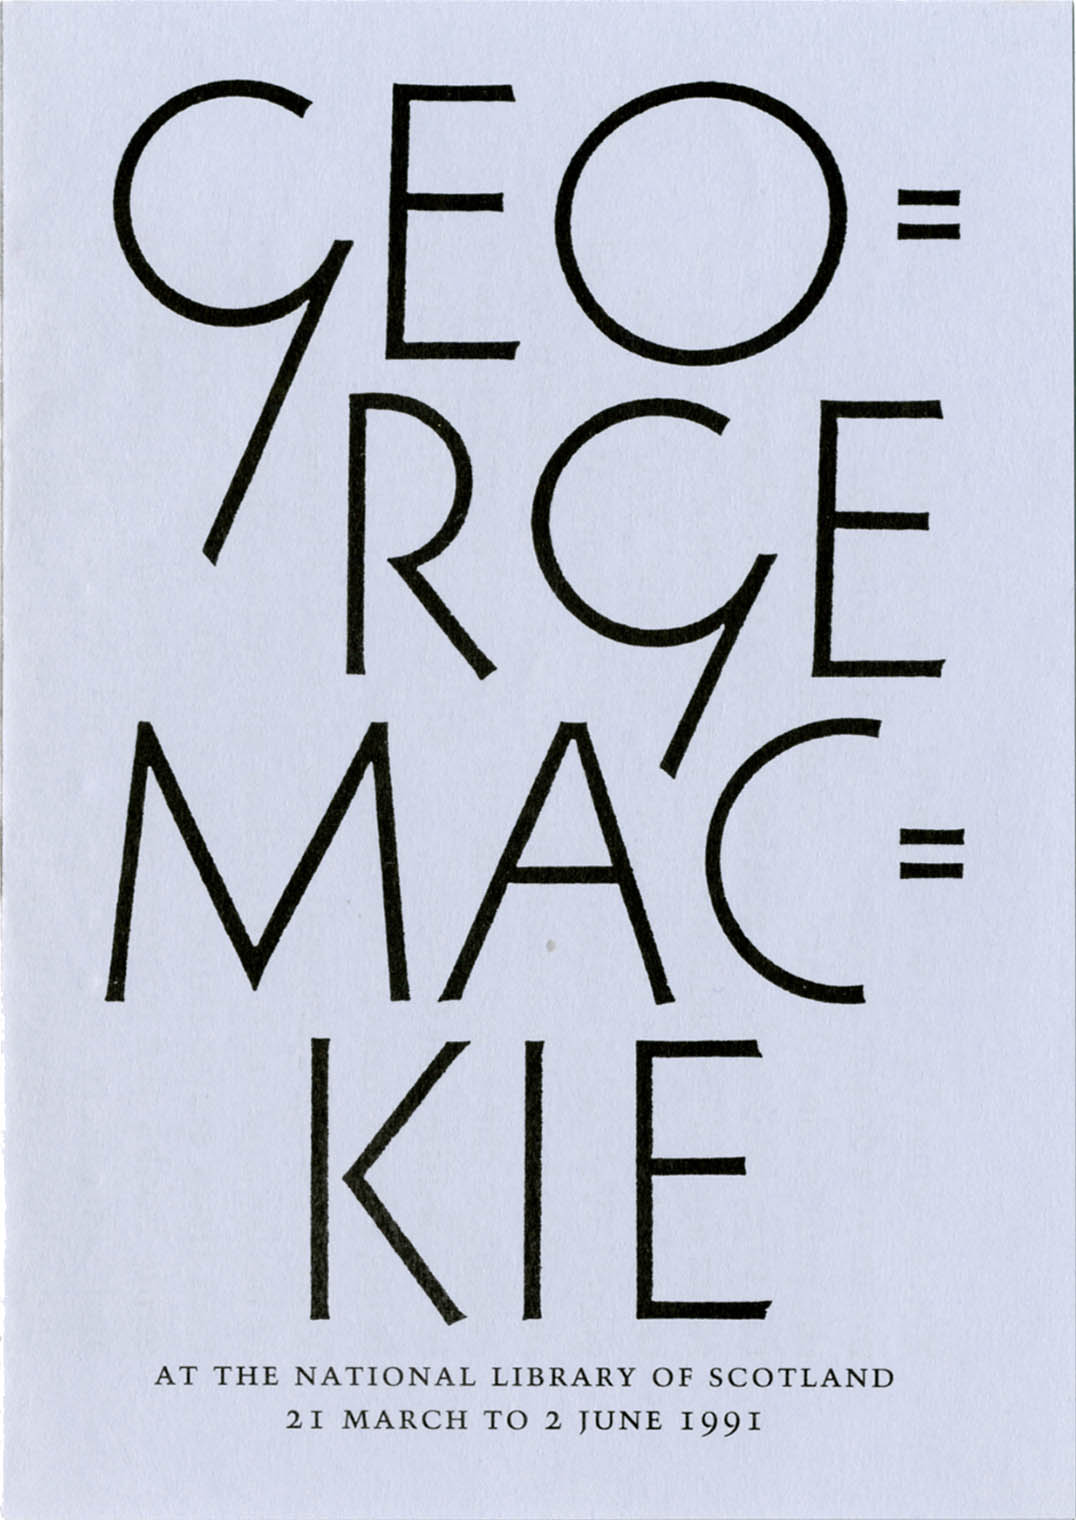 On George Mackie and his work